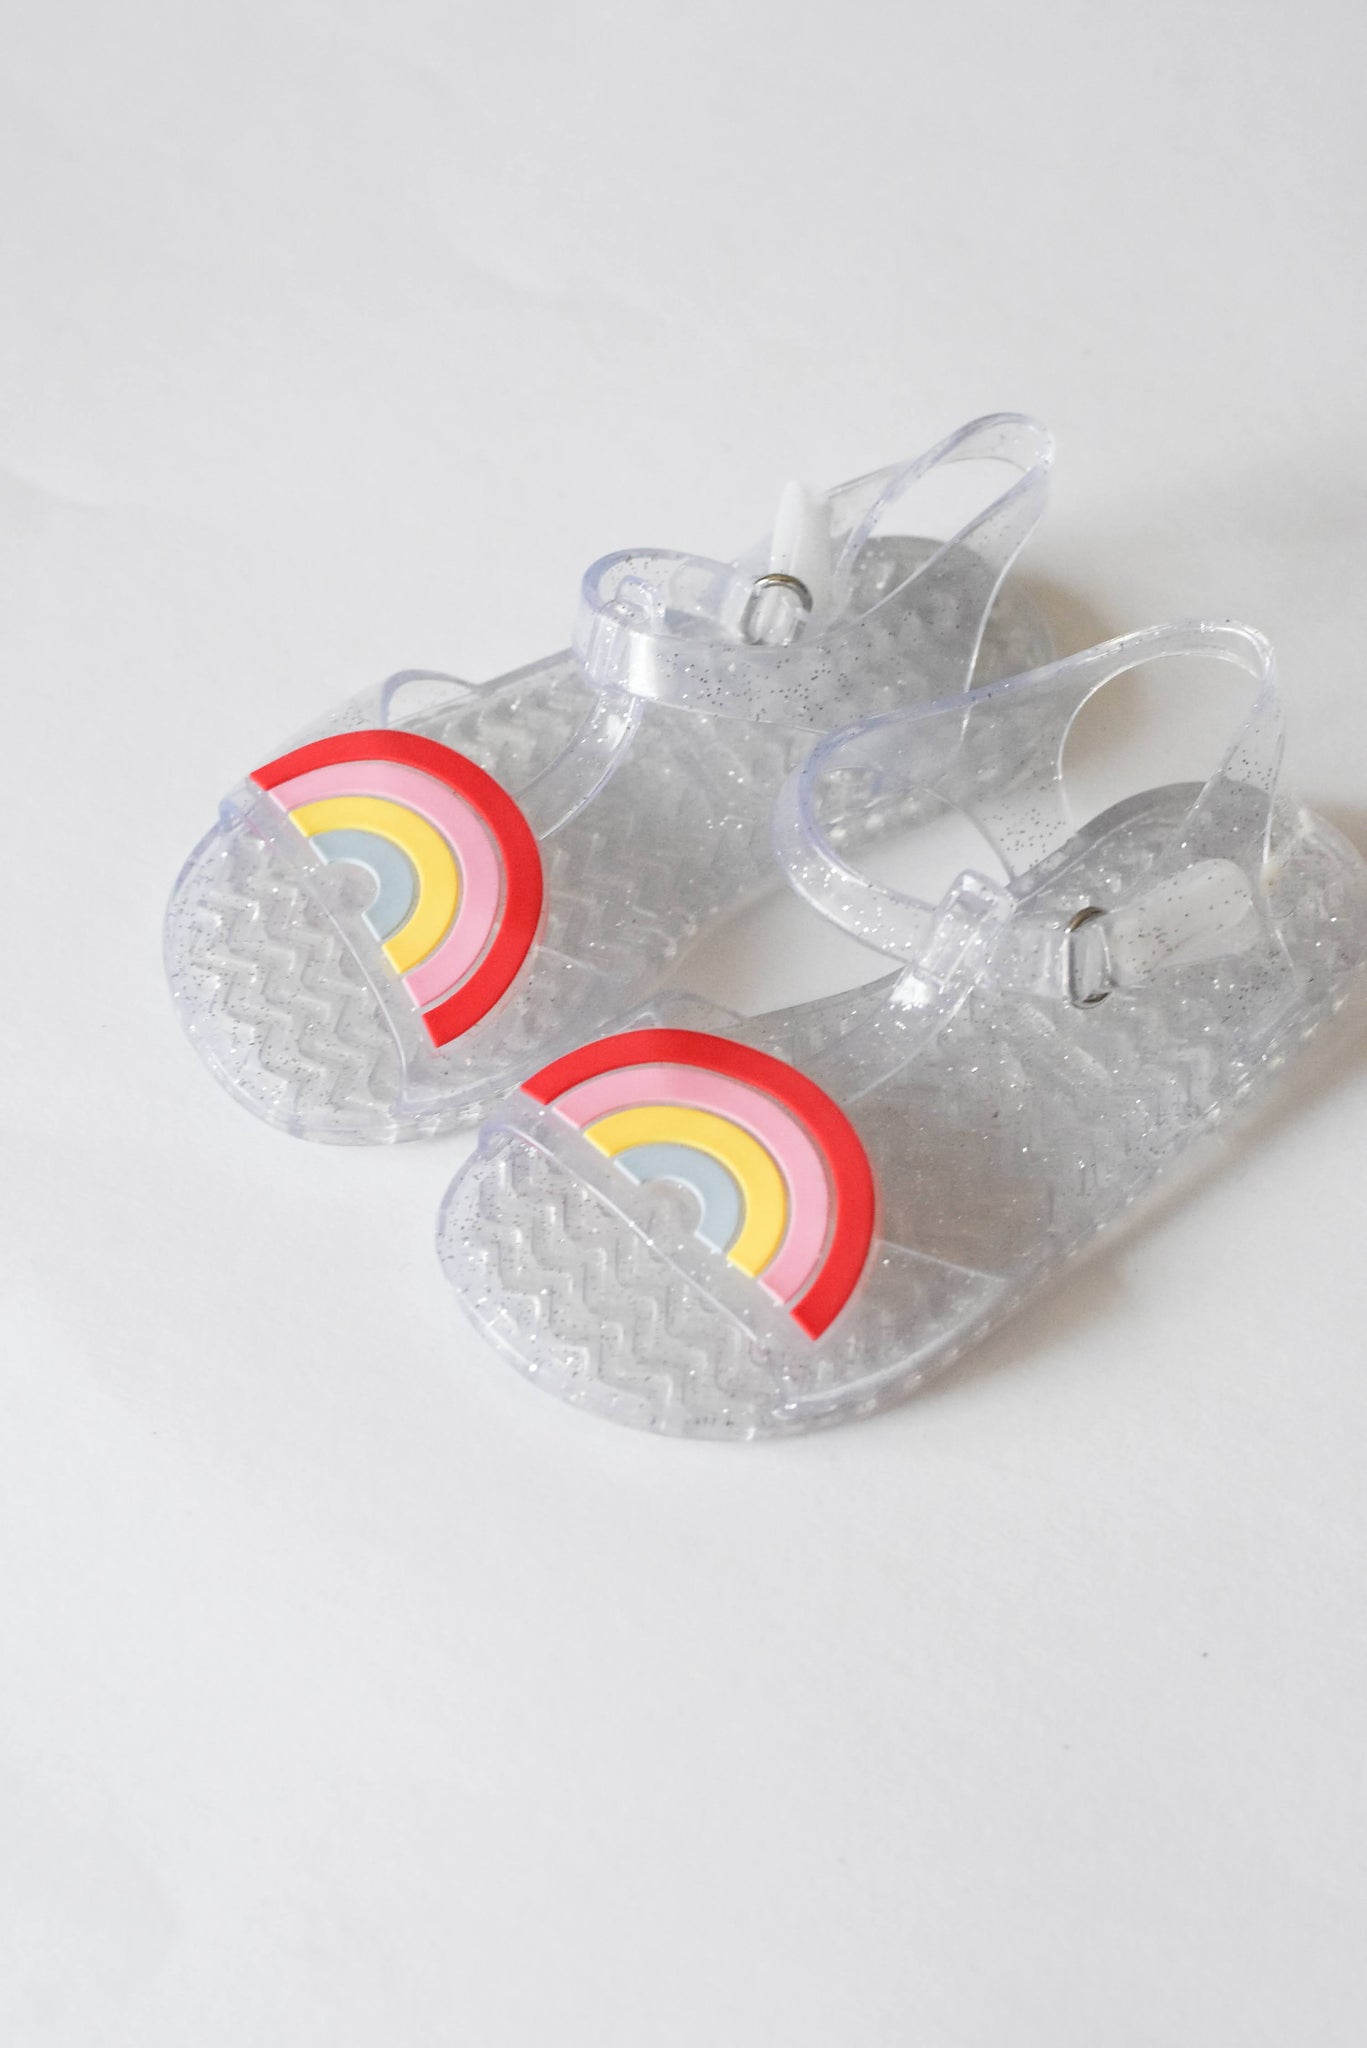 Rainbow Jelly Shoes • 7c